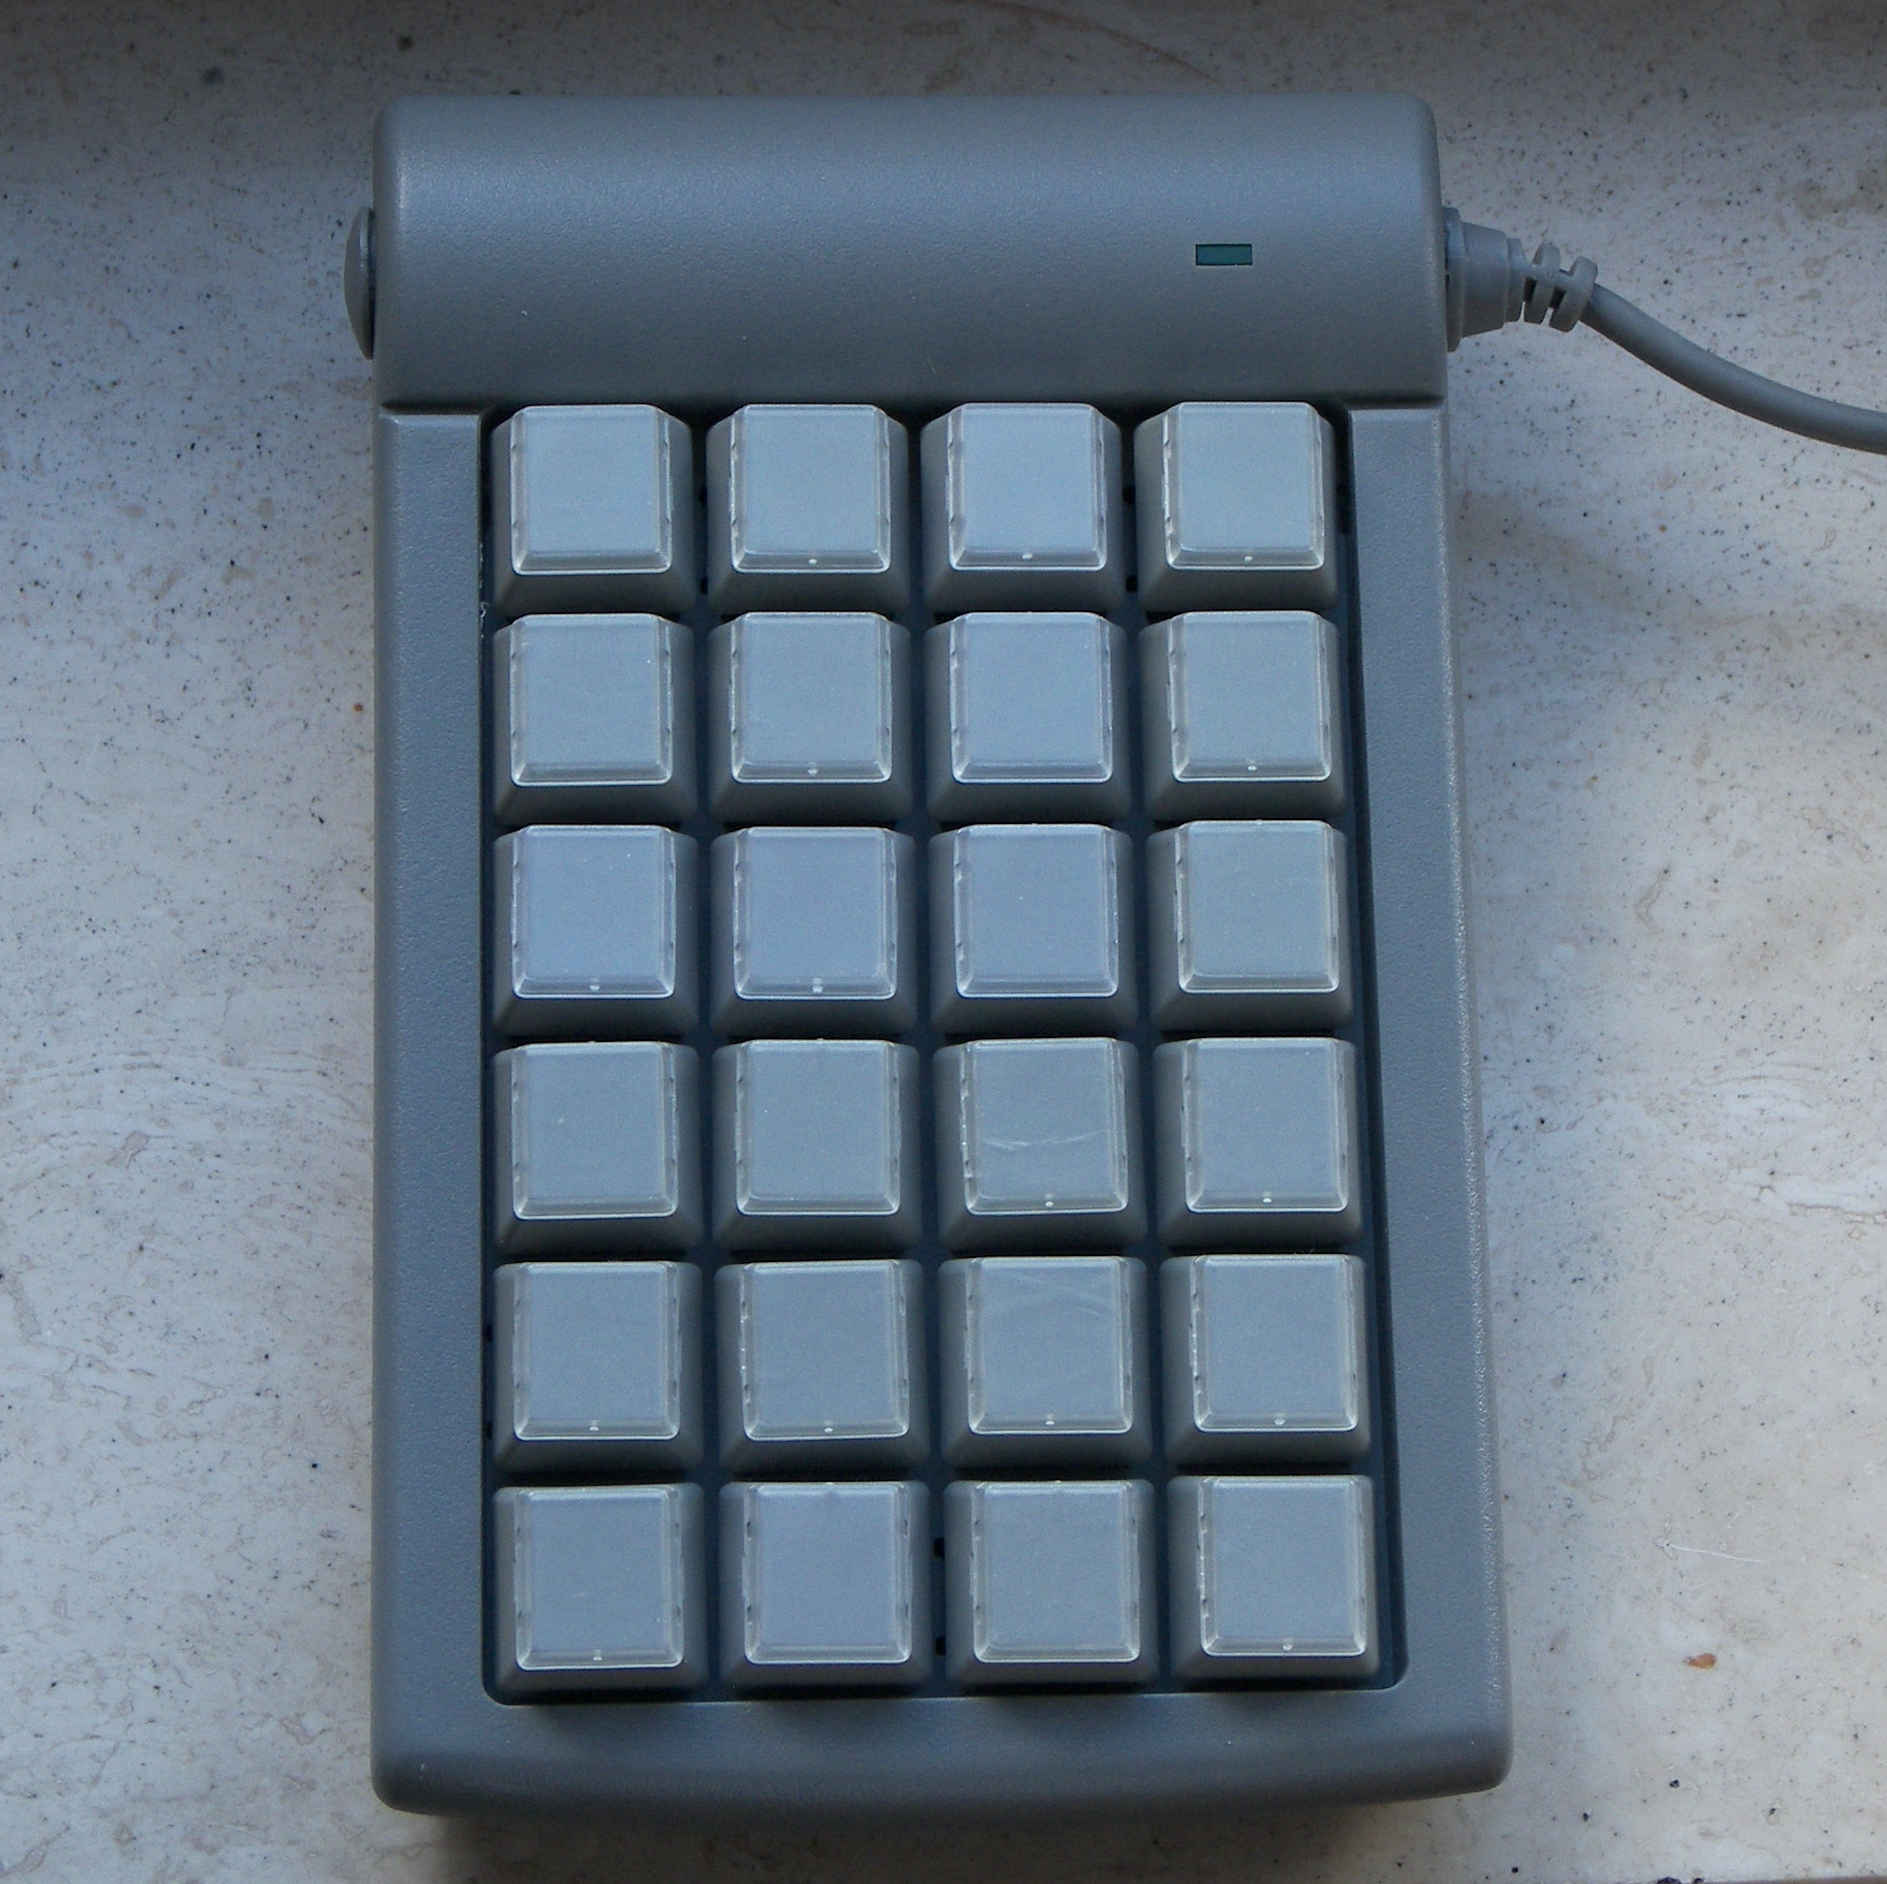 Genovation 683 keypad